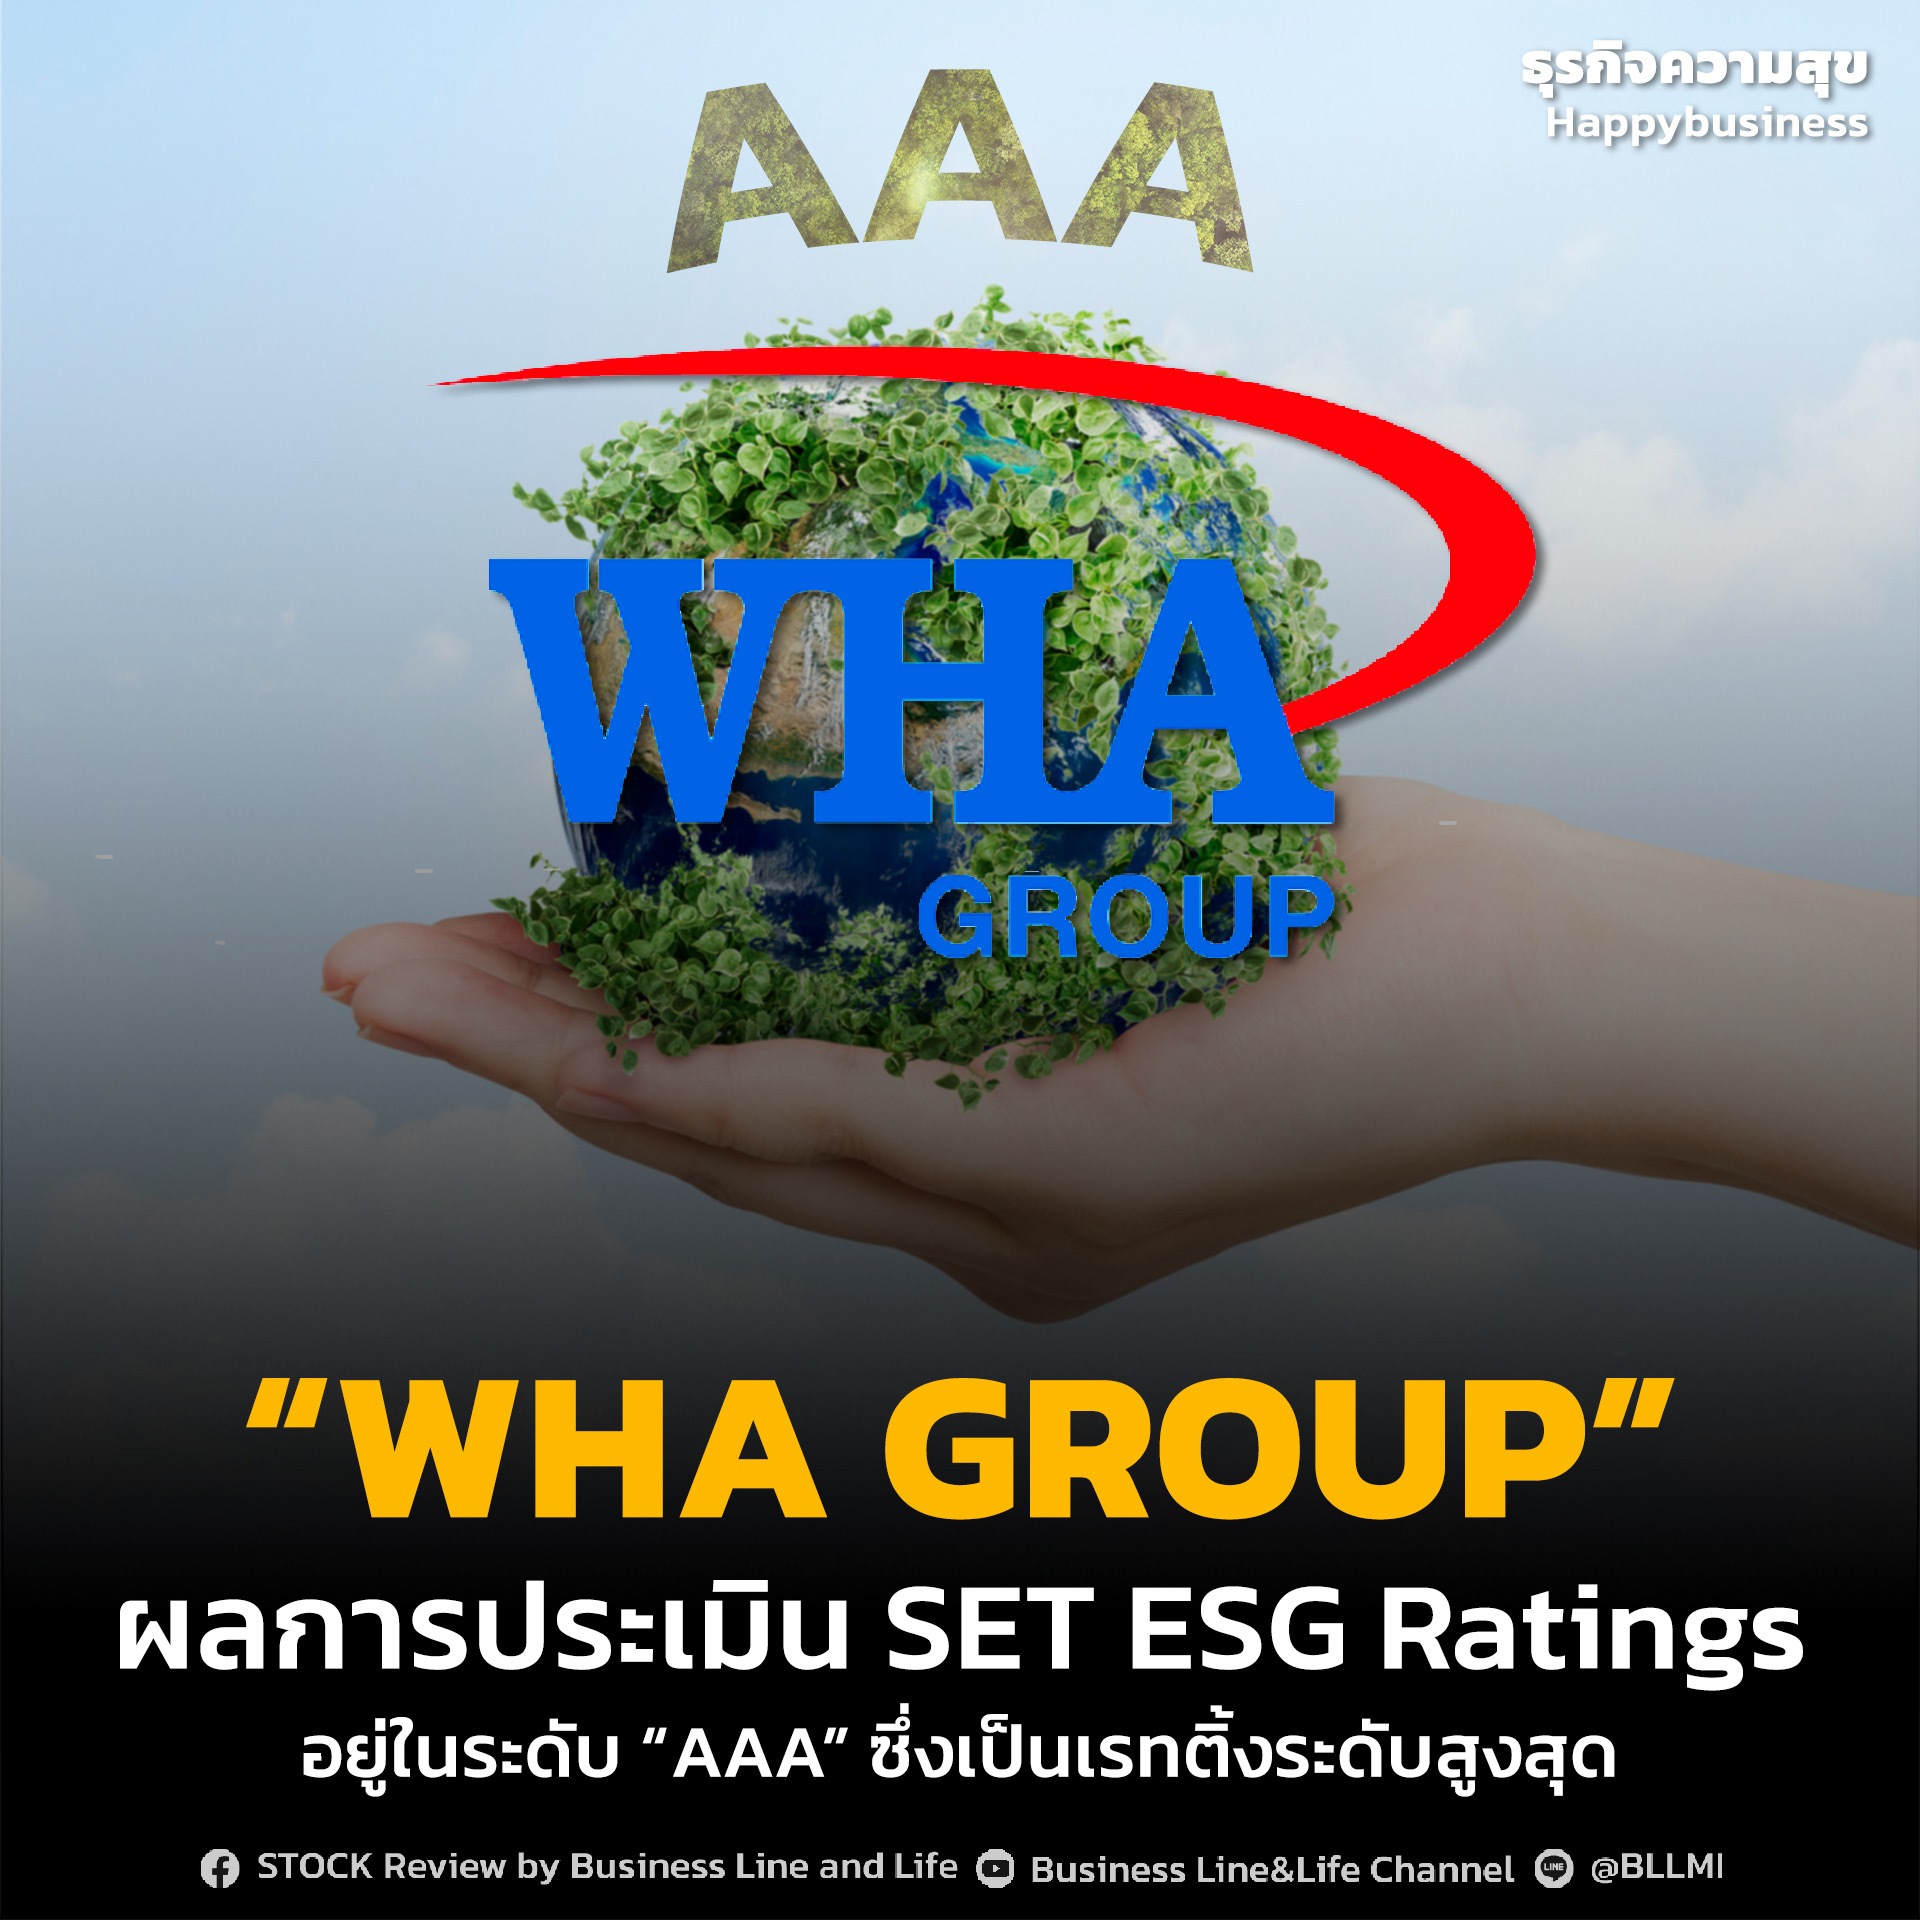 “WHA GROUP” ผลการประเมิน SET ESG Ratings อยู่ในระดับ “AAA” ซึ่งเป็นเรทติ้งระดับสูงสุด